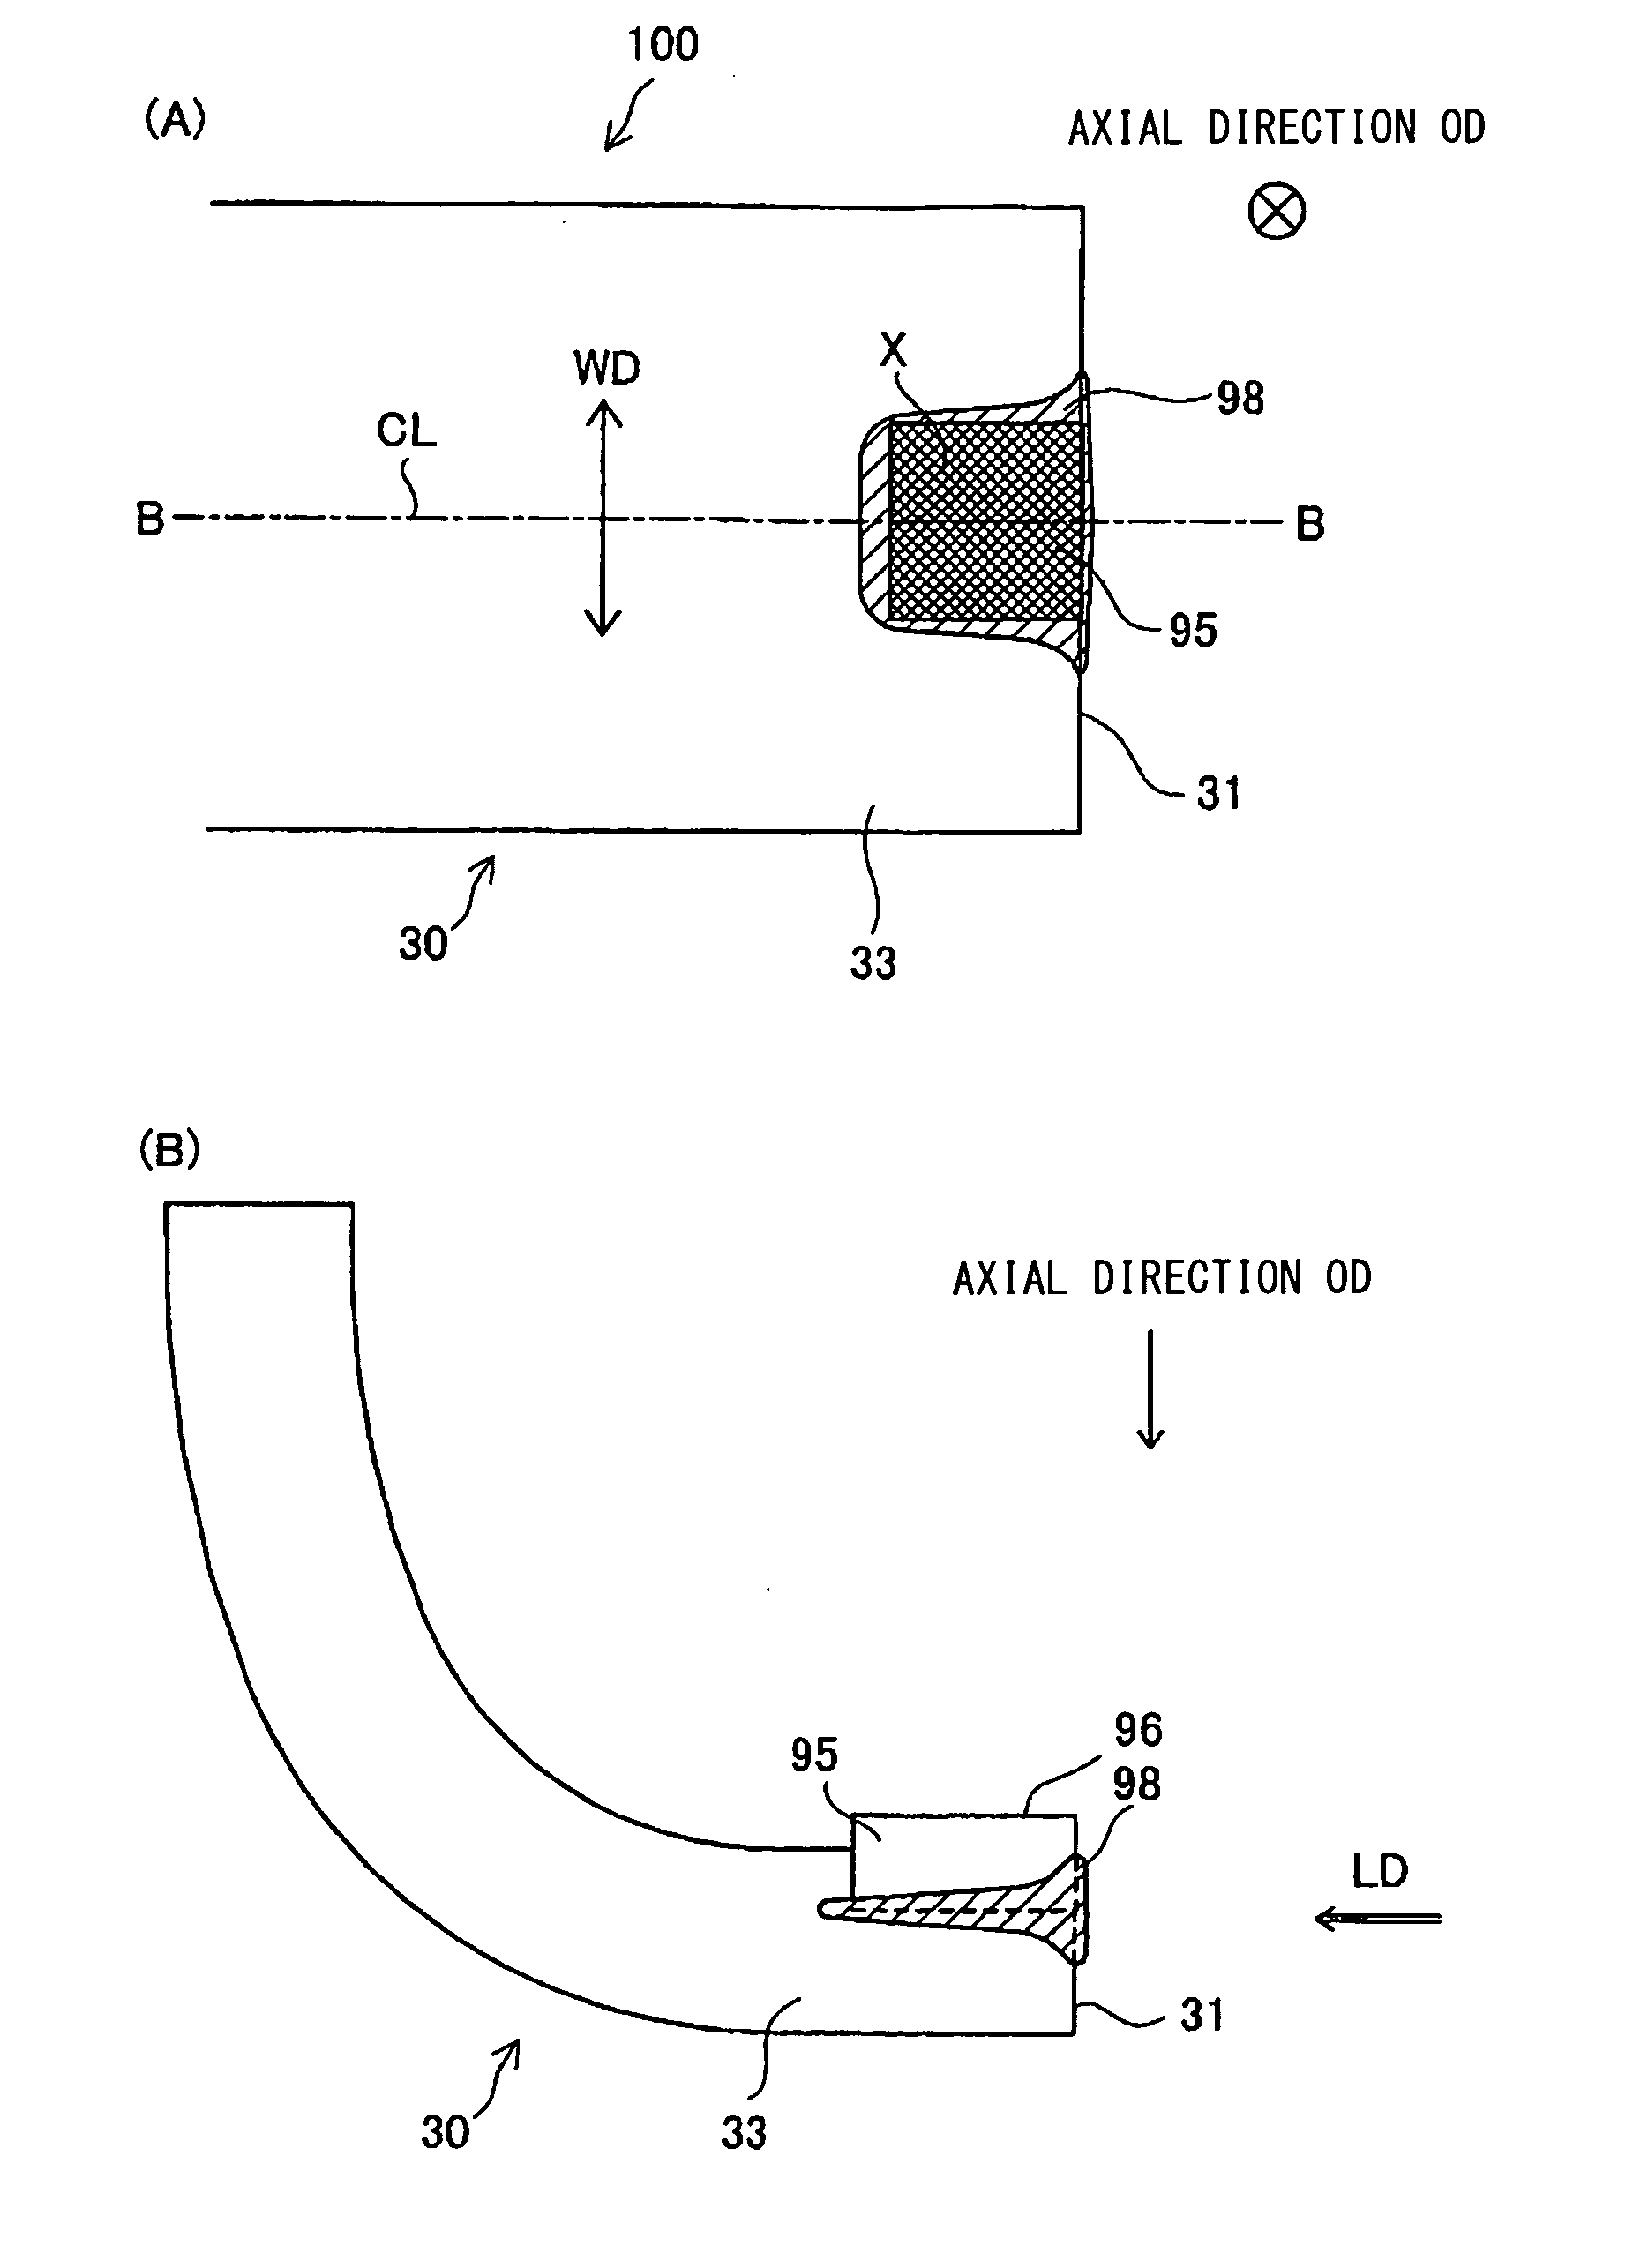 Method of manufacturing sparkplugs